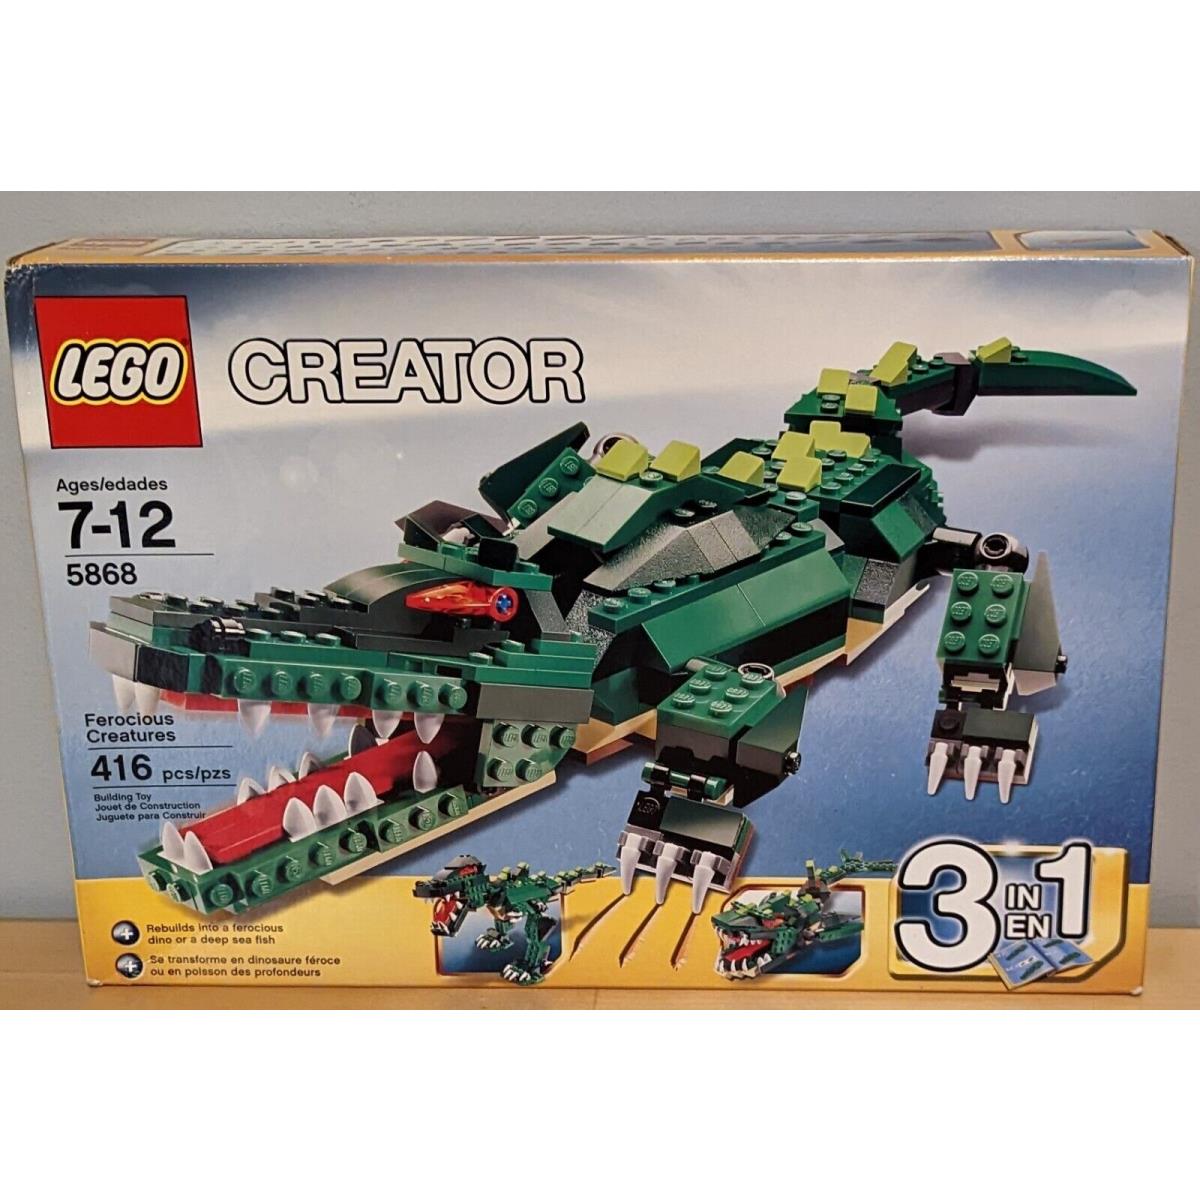 Damaged/new/sealed Lego Creator 3 IN 1 Ferocious Creatures 5868